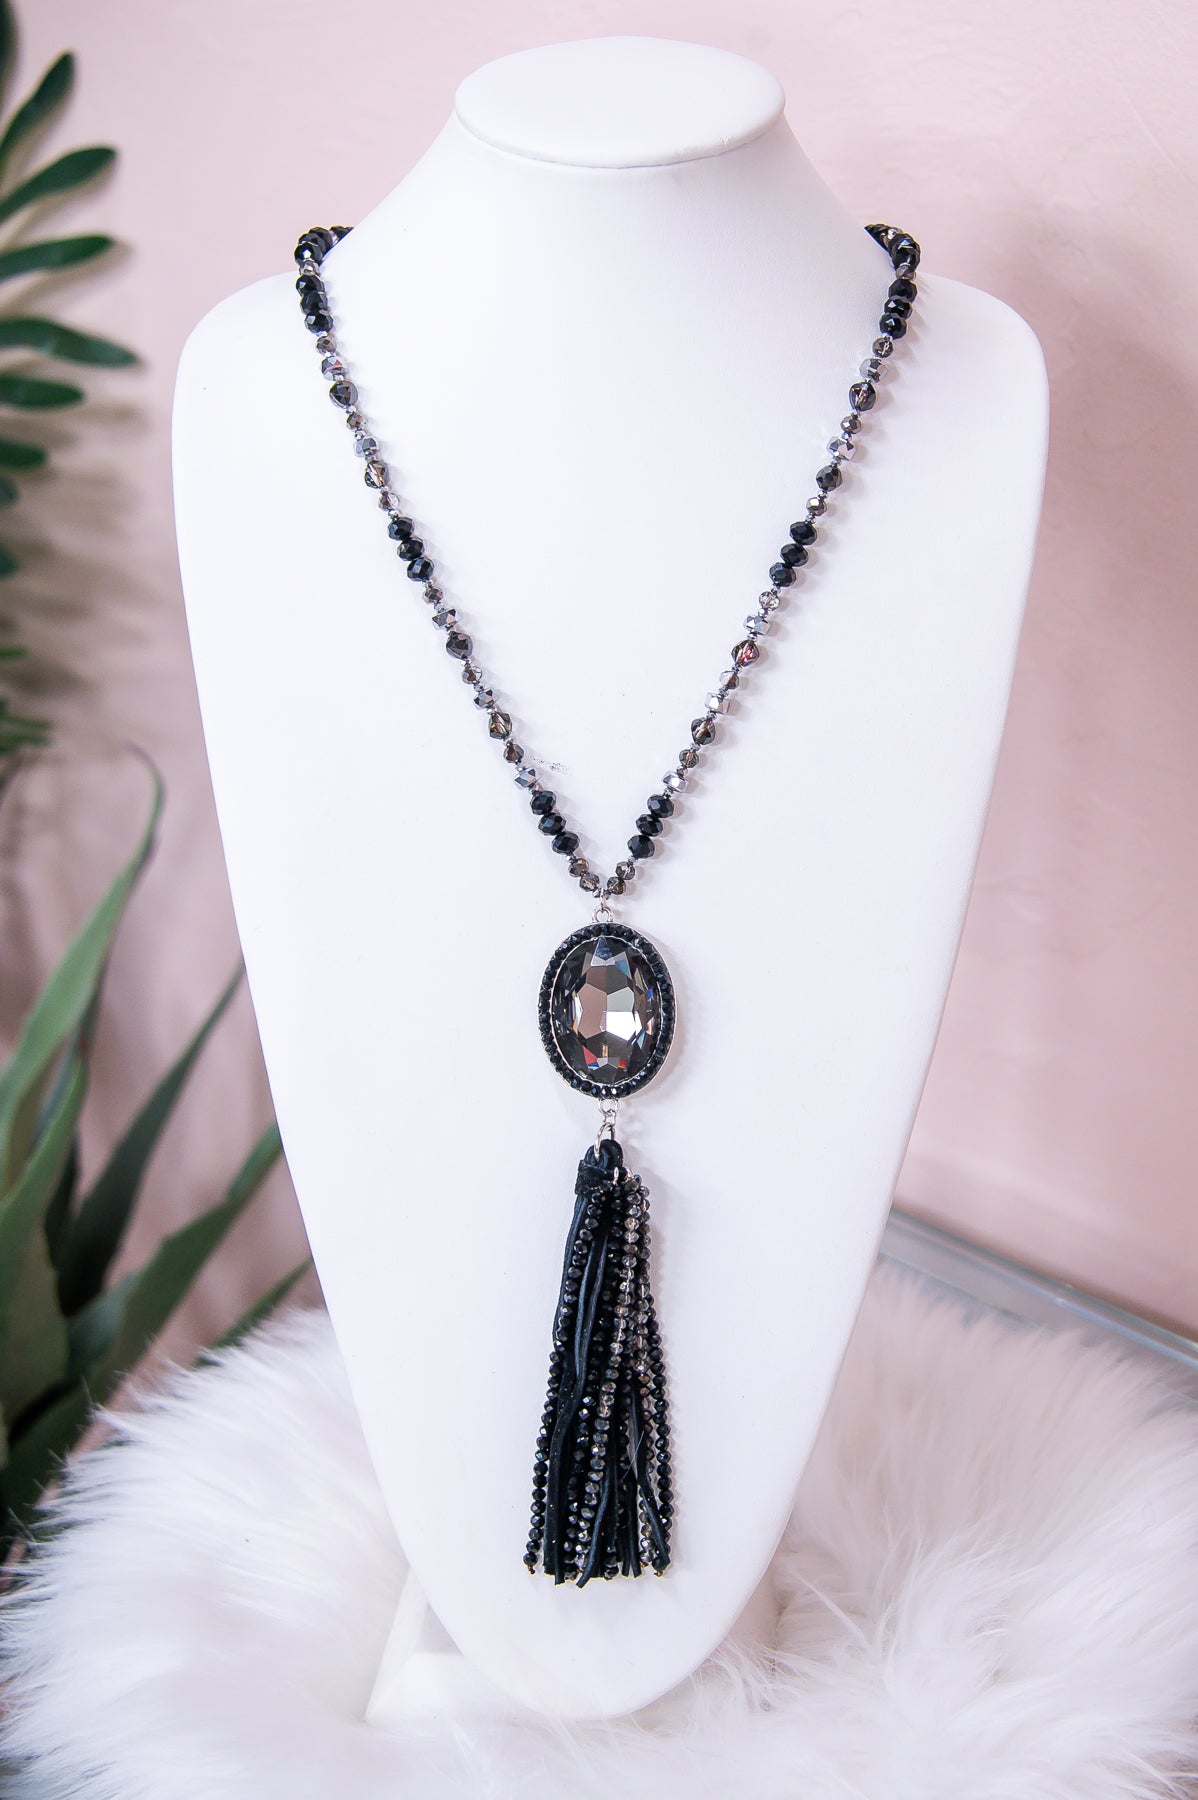 Black Beaded/Fringe Crystal Pendant Necklace - NEK4225BK